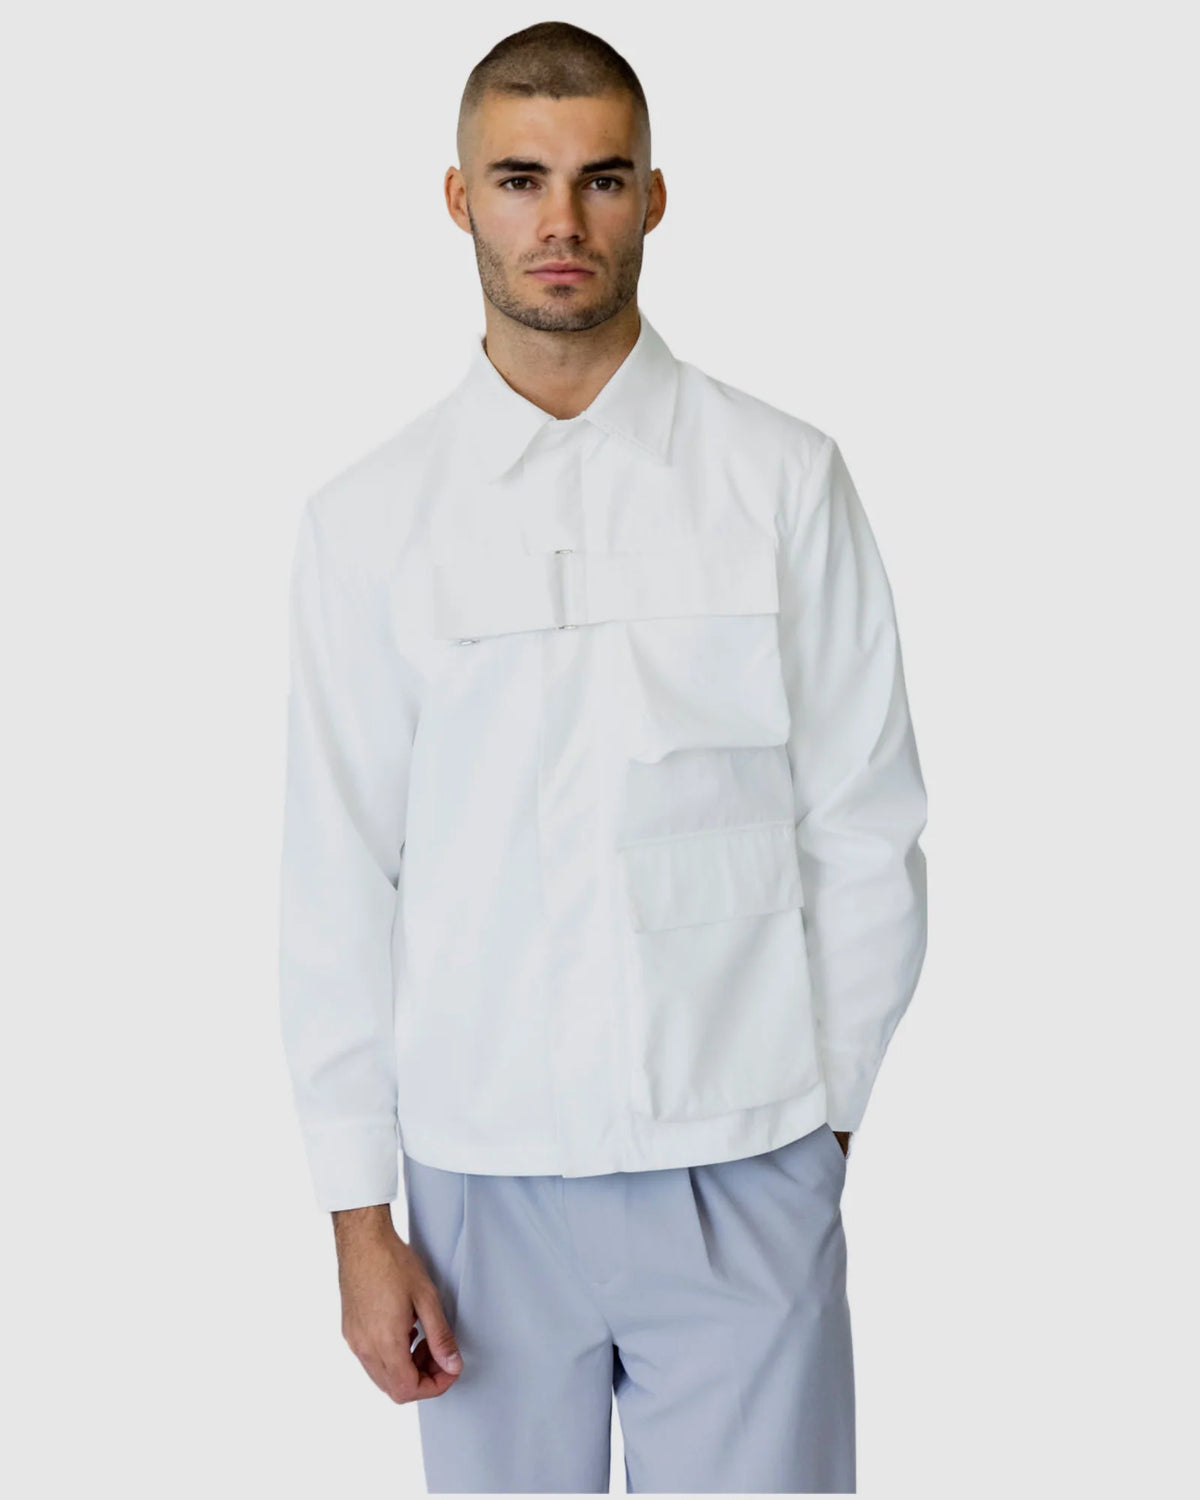 Justin Cassin Kurtis Dual Pocket Jacket in White Color